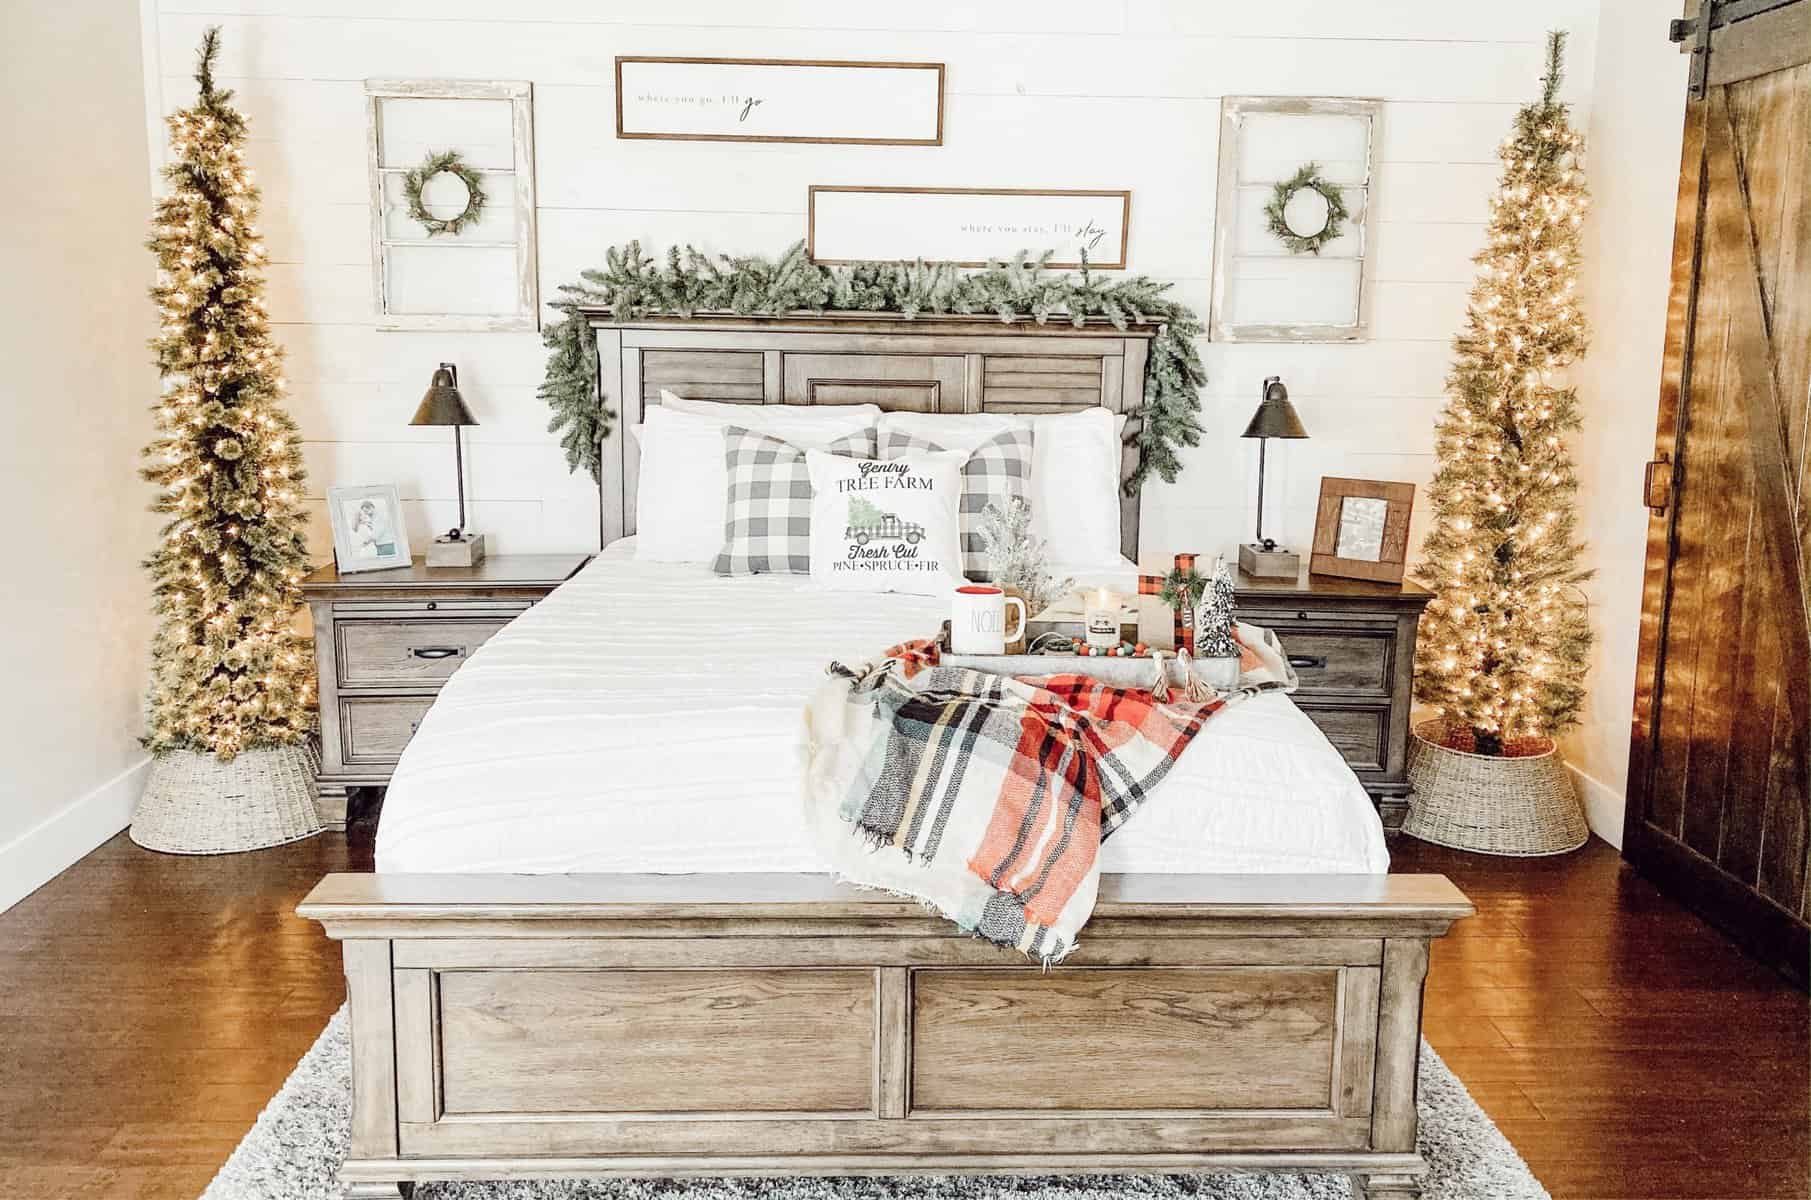 Christmas Bedroom